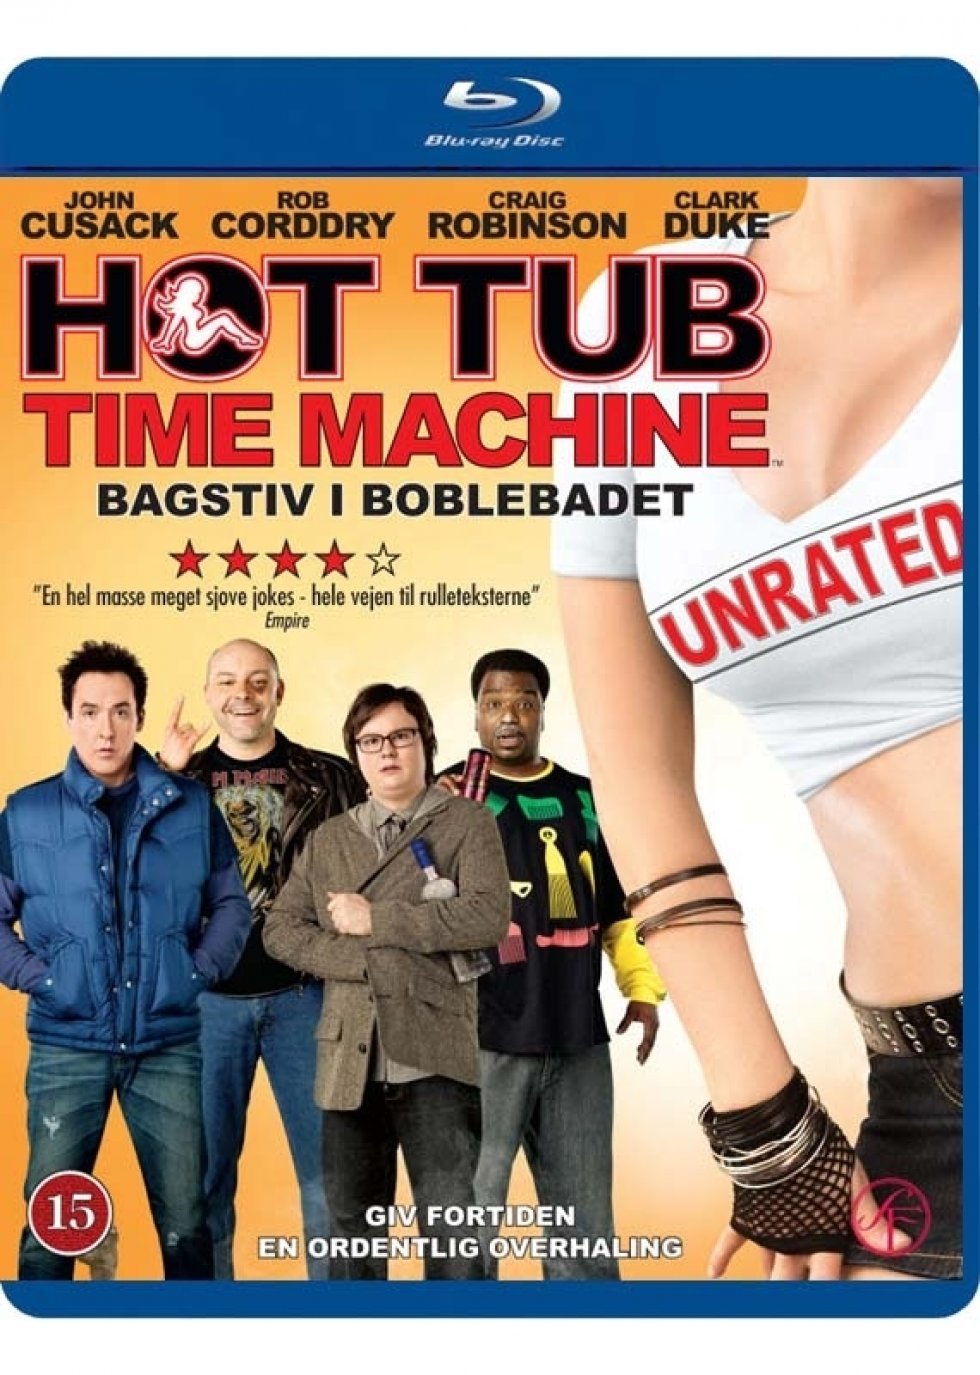 Hot Tub Time Machine - På Blu-ray og dvd